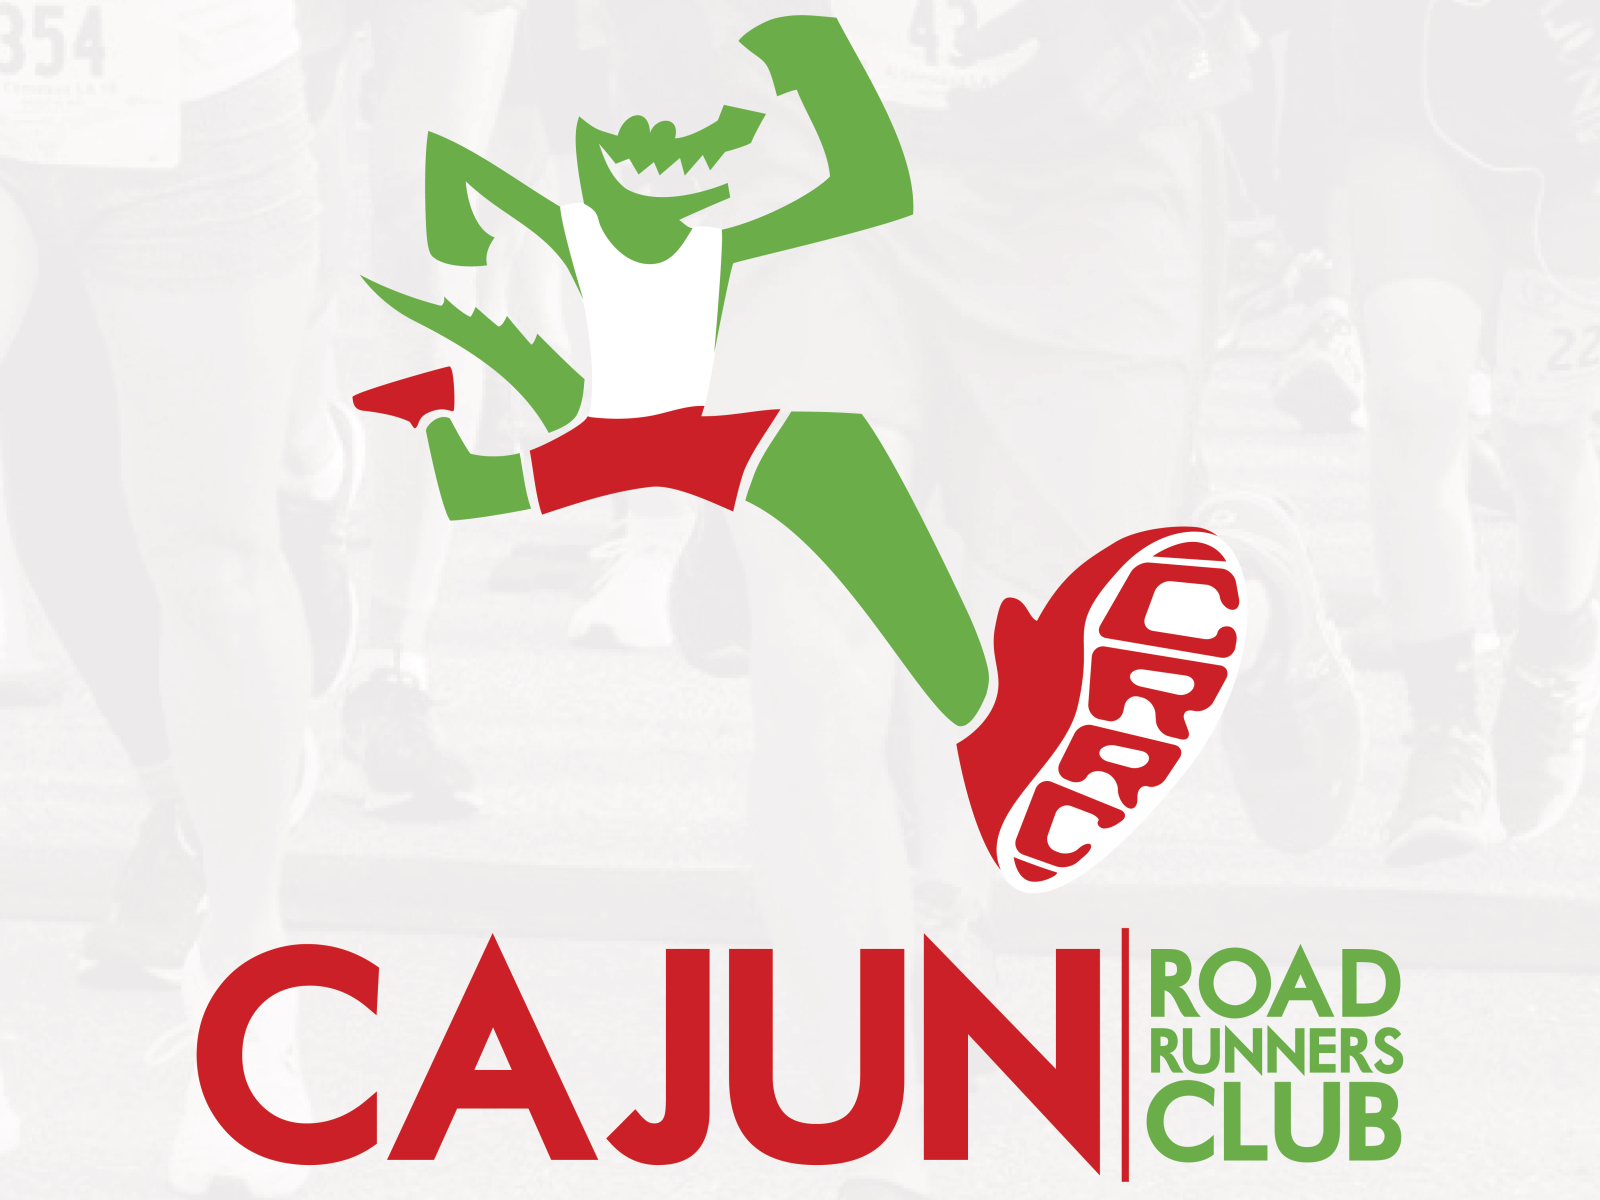 Cajun Road Runners Club Logo Design By Matthew Hernandez On Dribbble